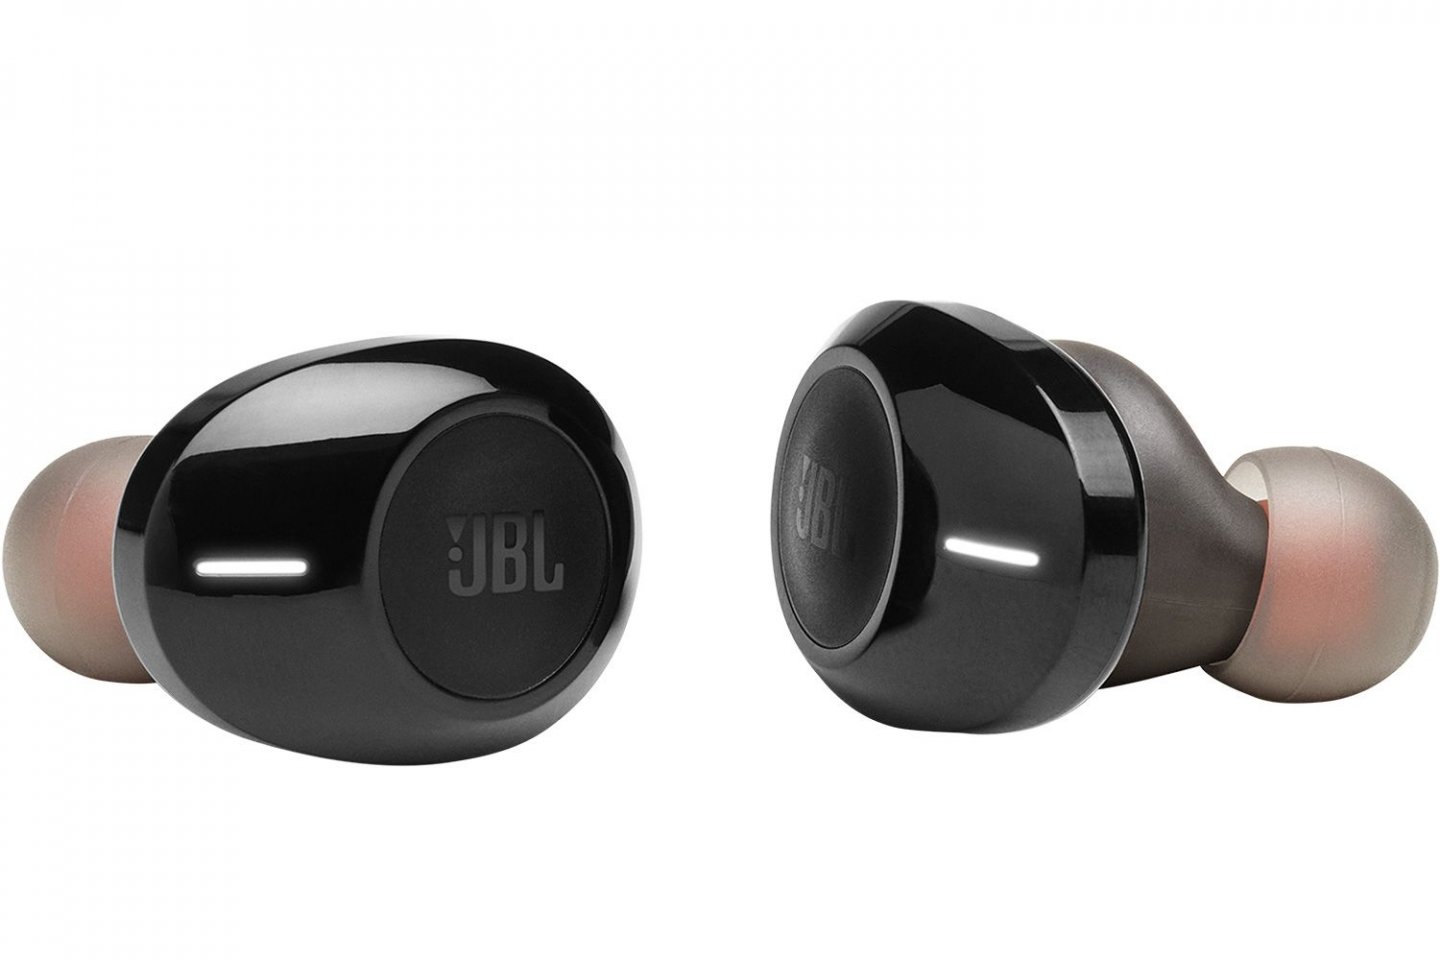 JBL представила новые True Wireless наушники